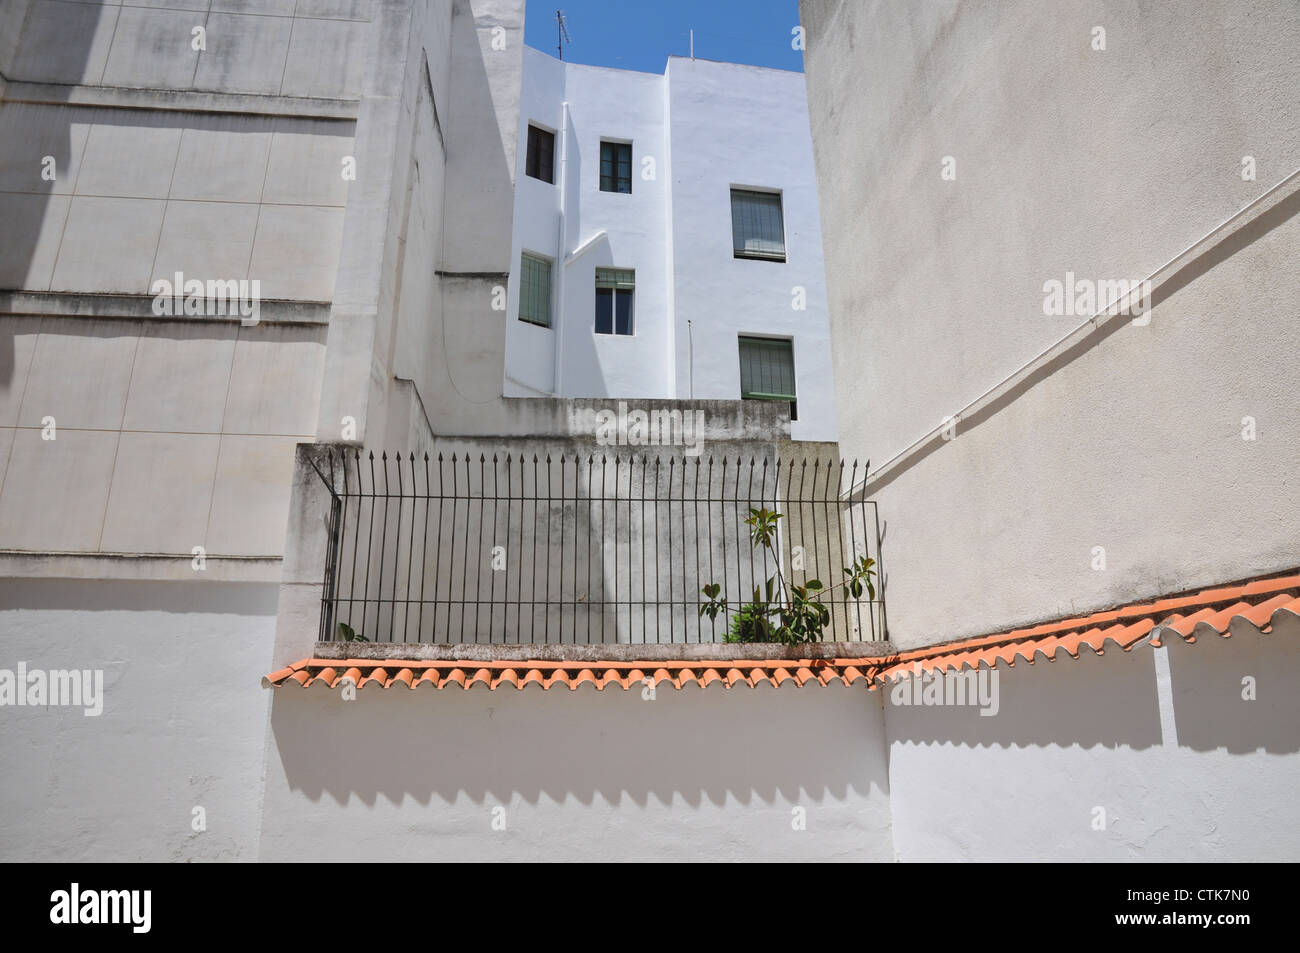 Blank white walls, wrought iron spiked fence, bleak street scene, hot midday sun, Seville Spain. Stock Photo